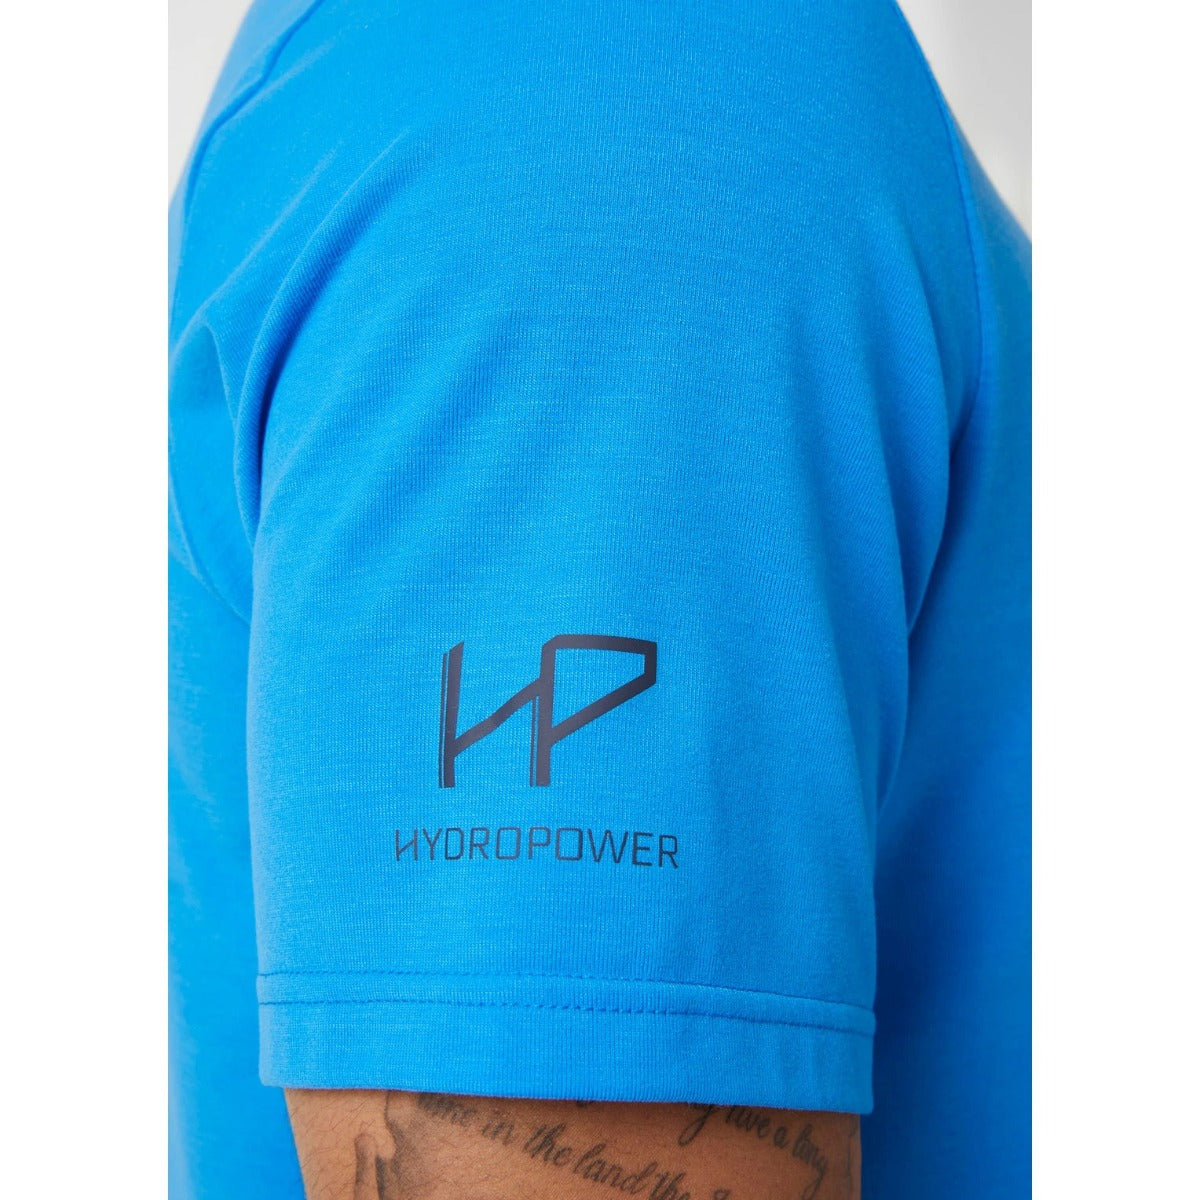 Helly Hansen HP Racing Quick Dry T-shirt Men's (Blue)